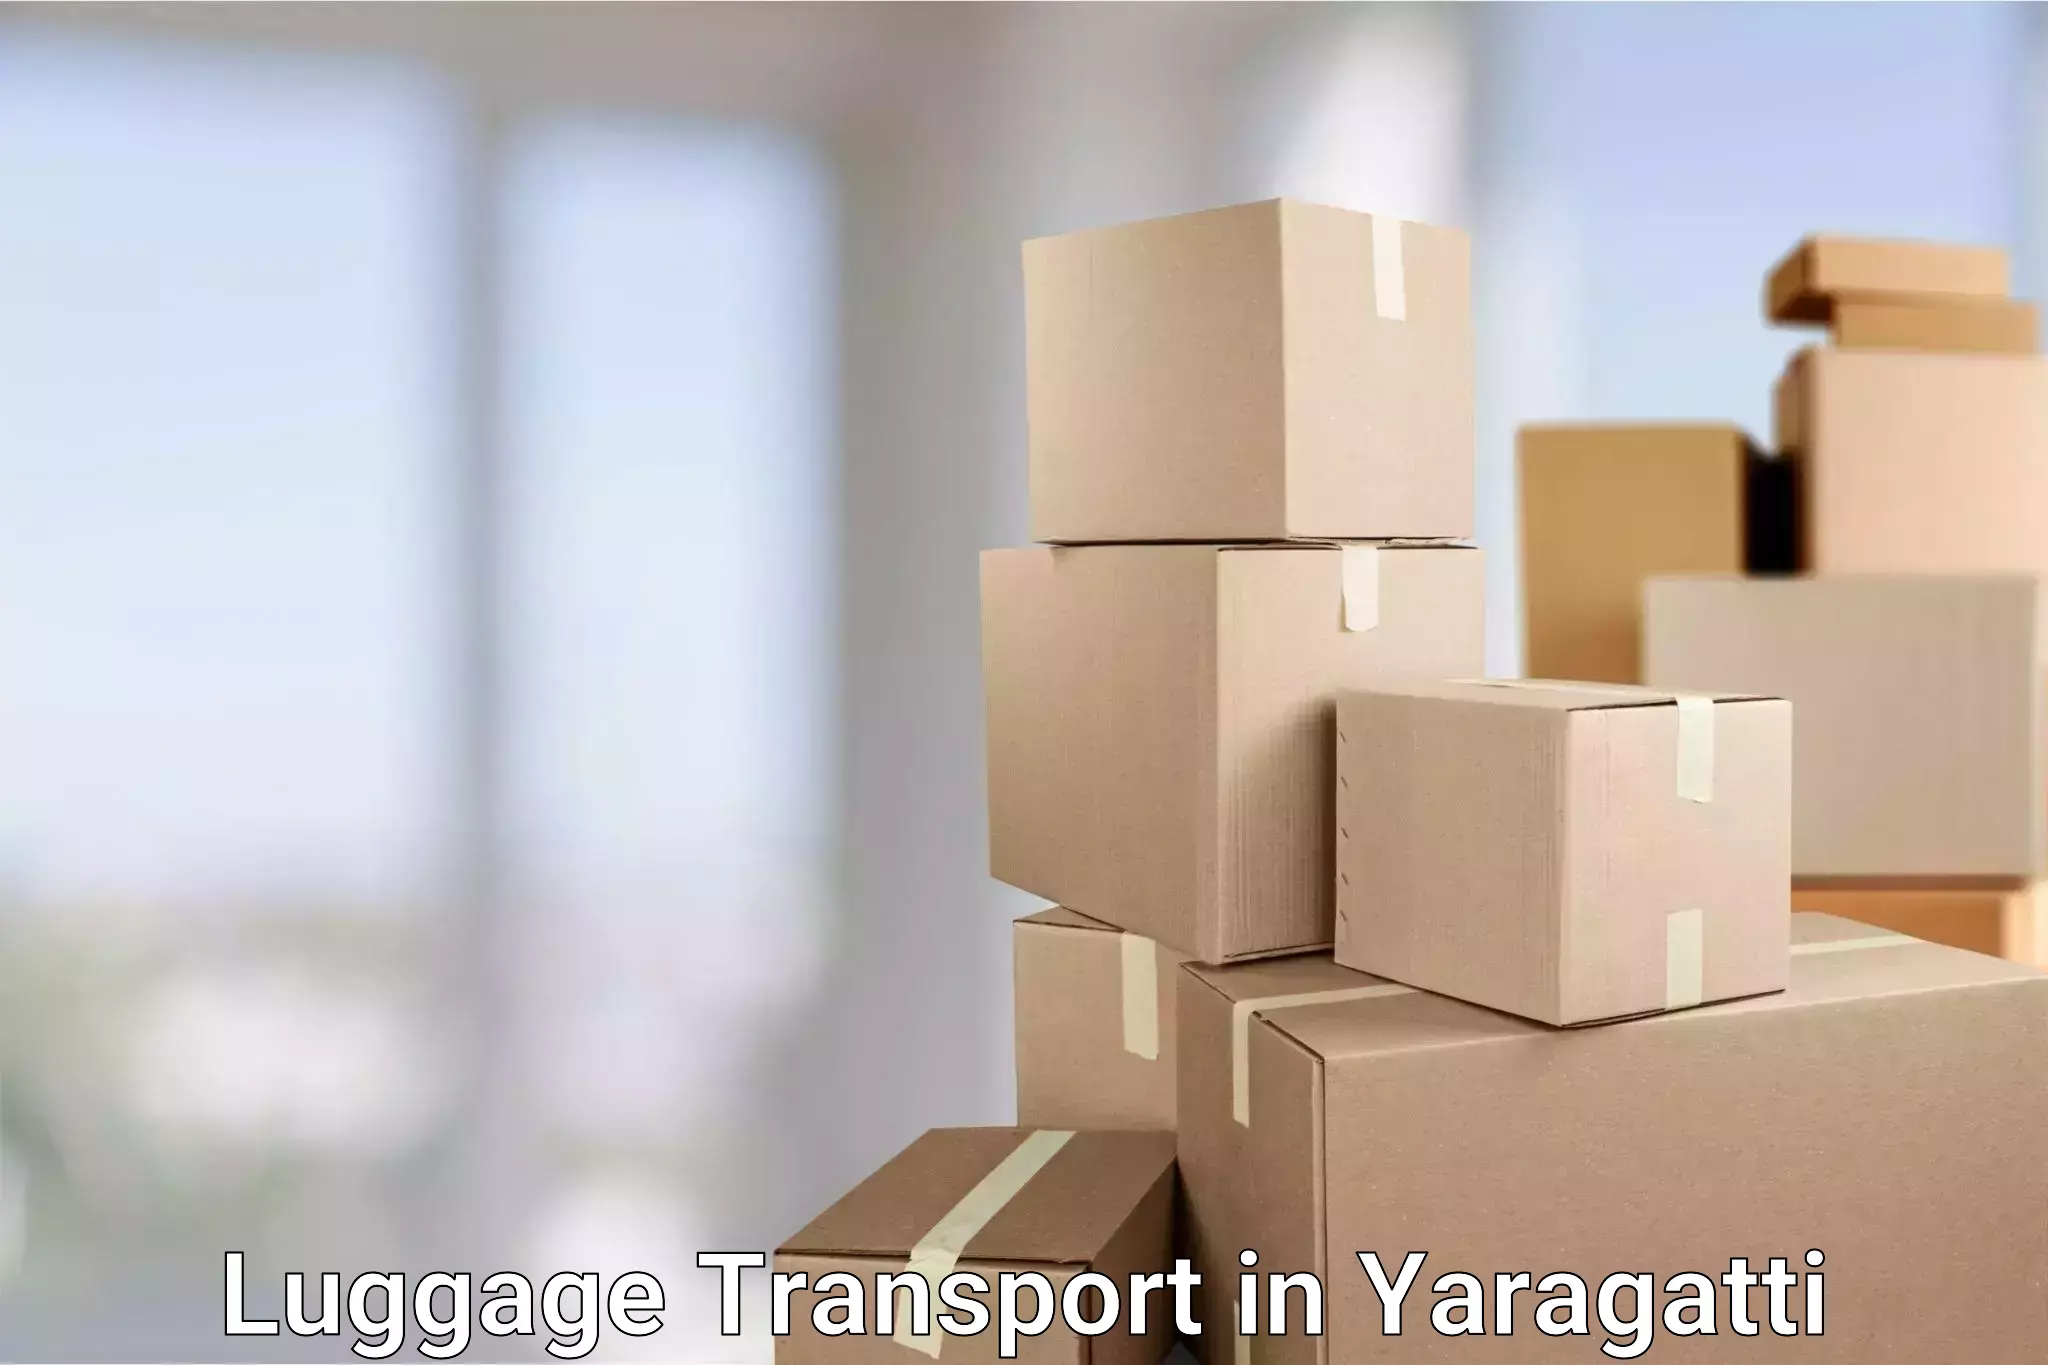 Luggage transport tips in Yaragatti